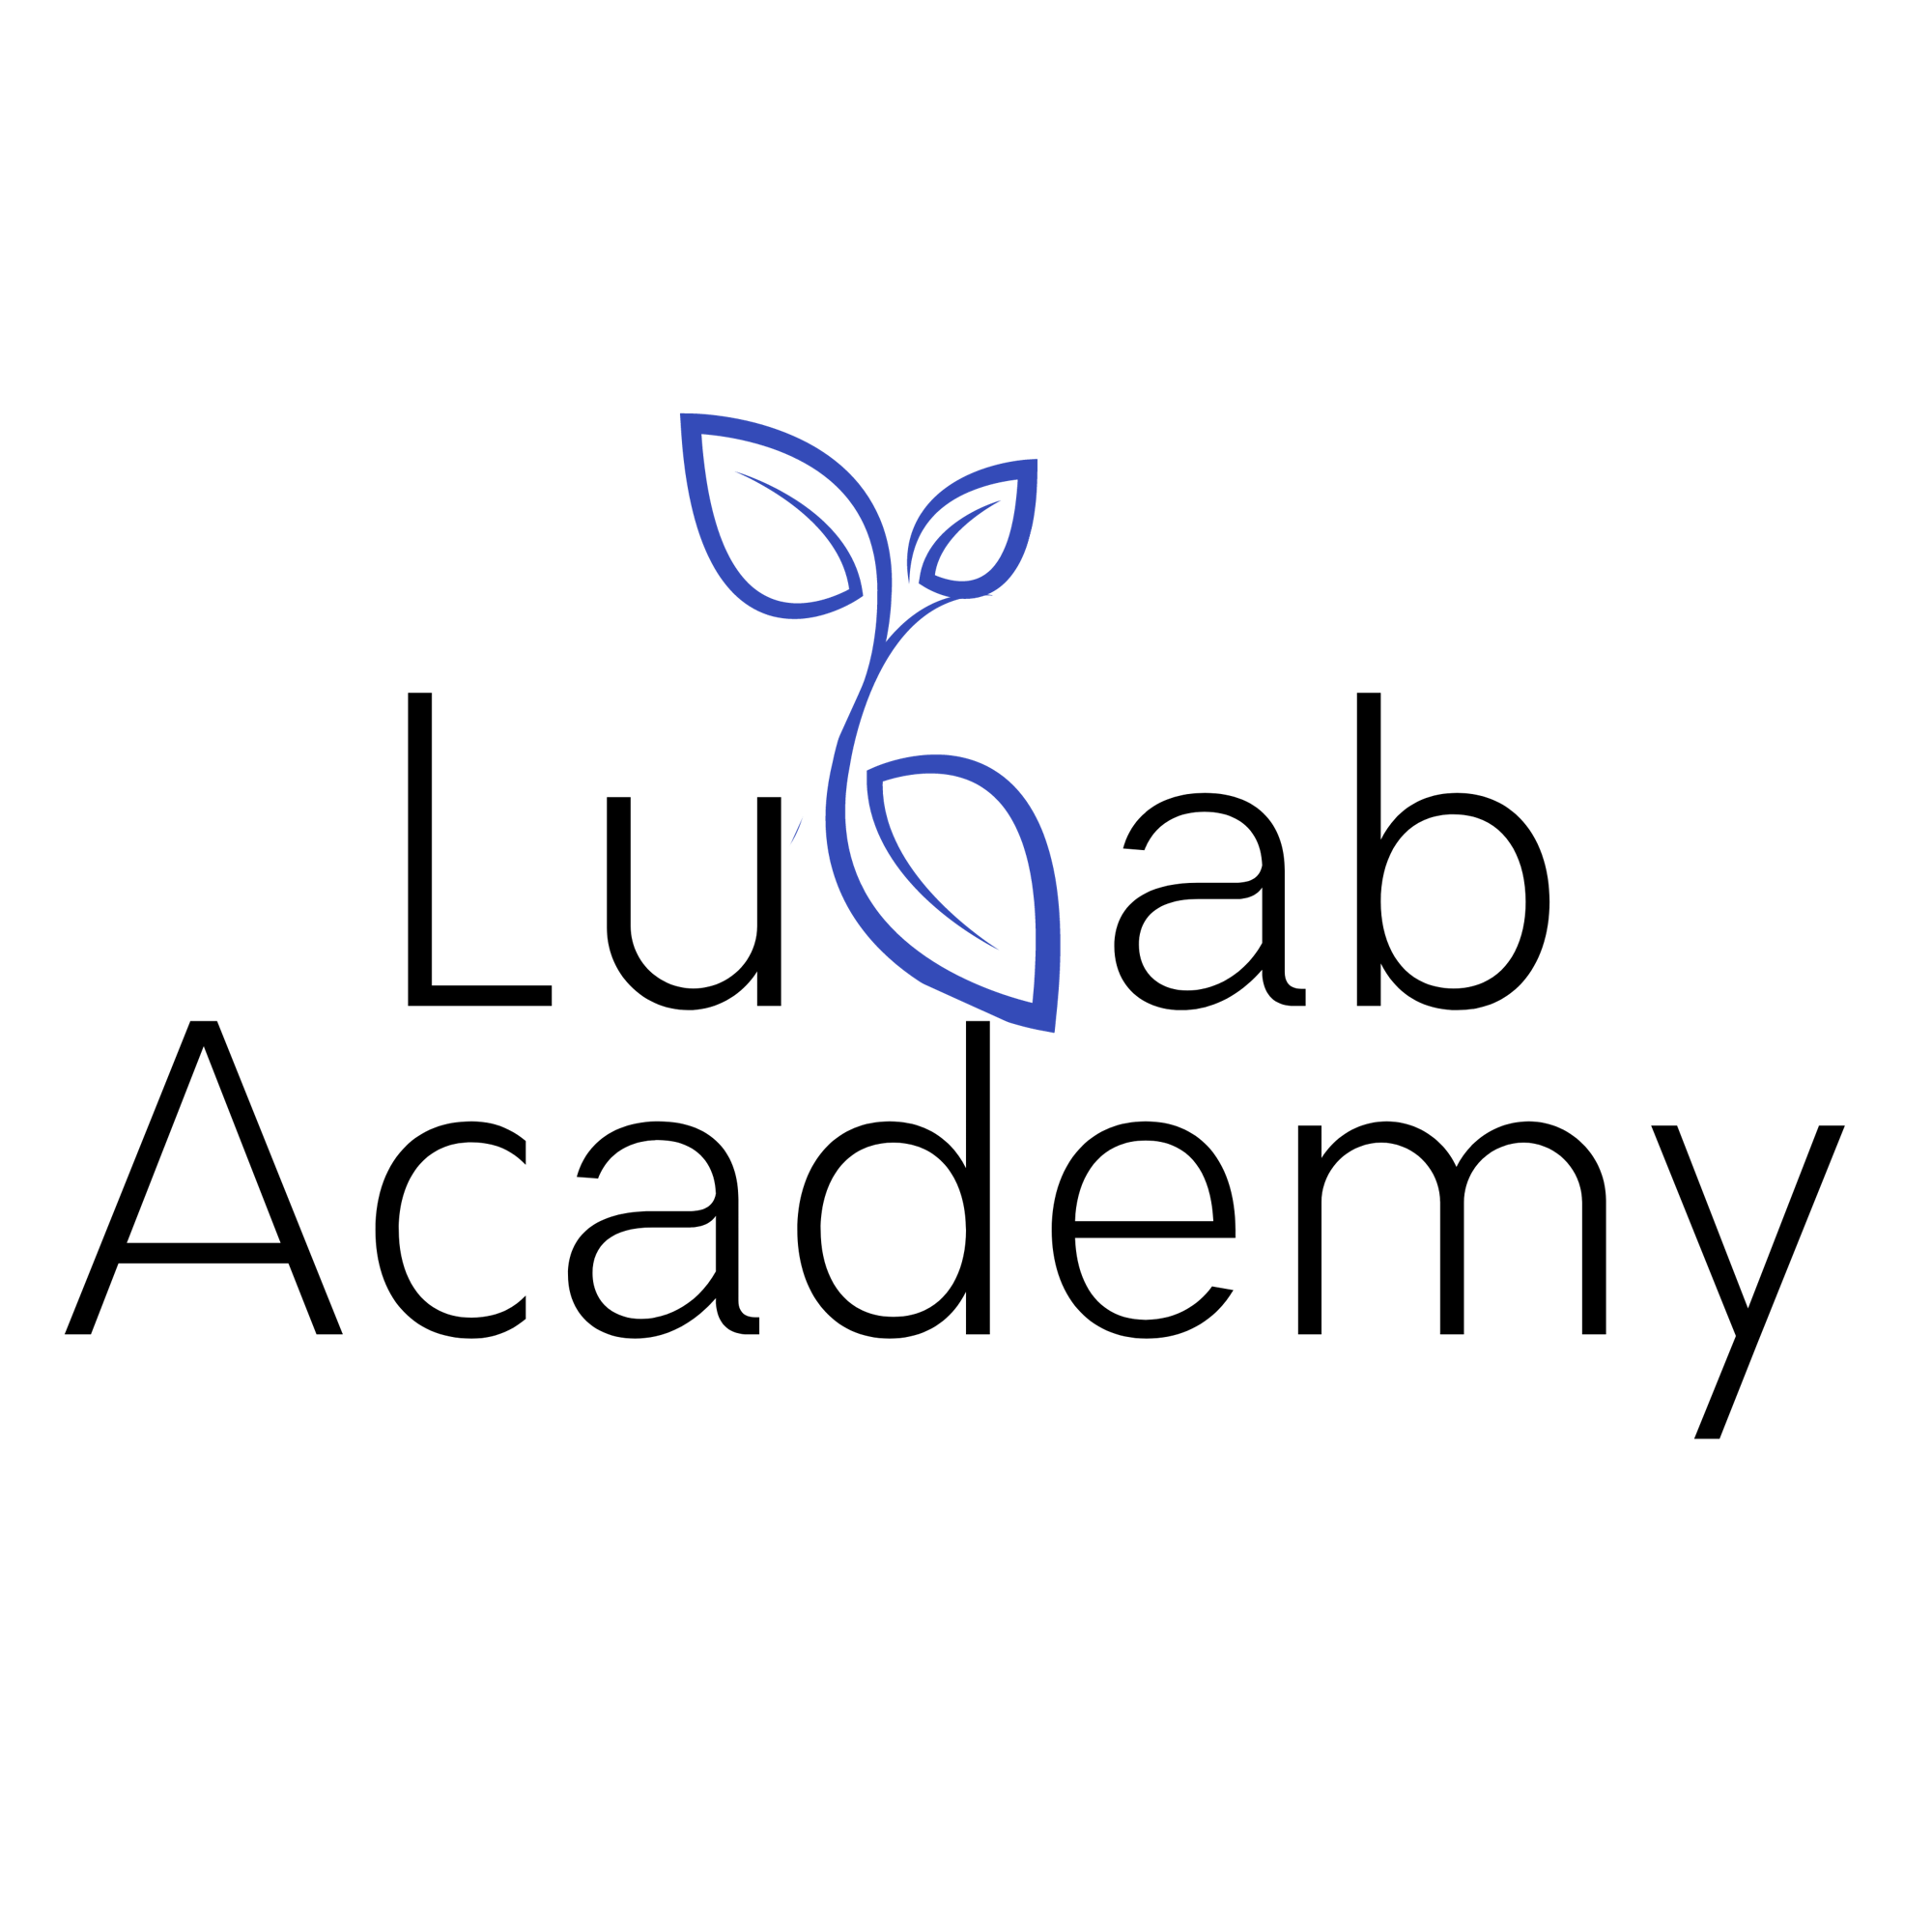 Lubab Academy - Student Portal